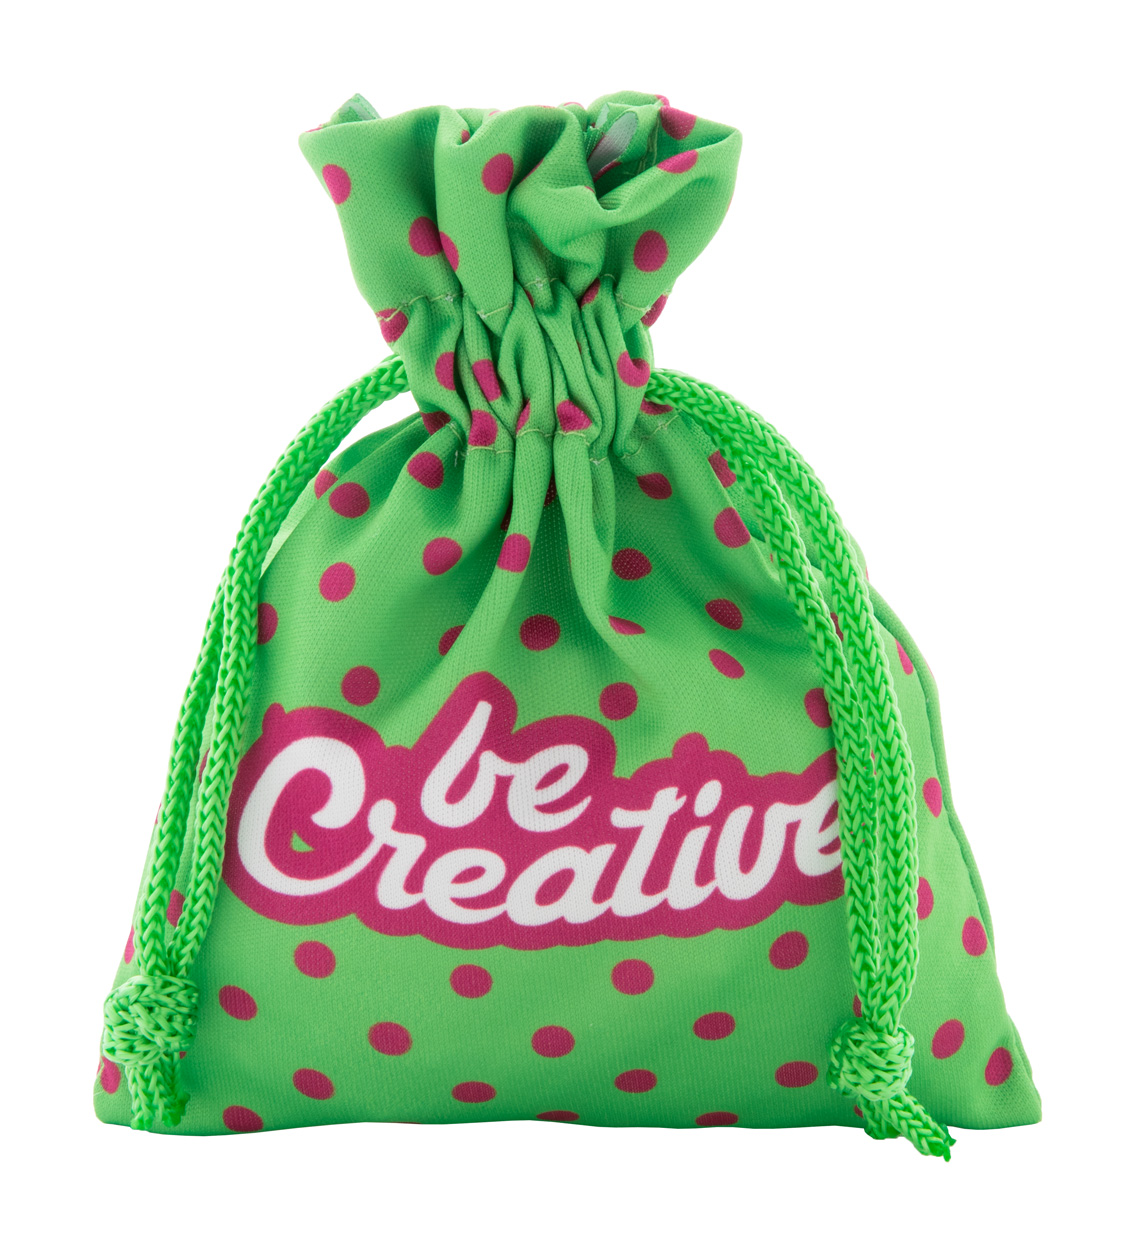 SuboGift S custom gift bag, small - green